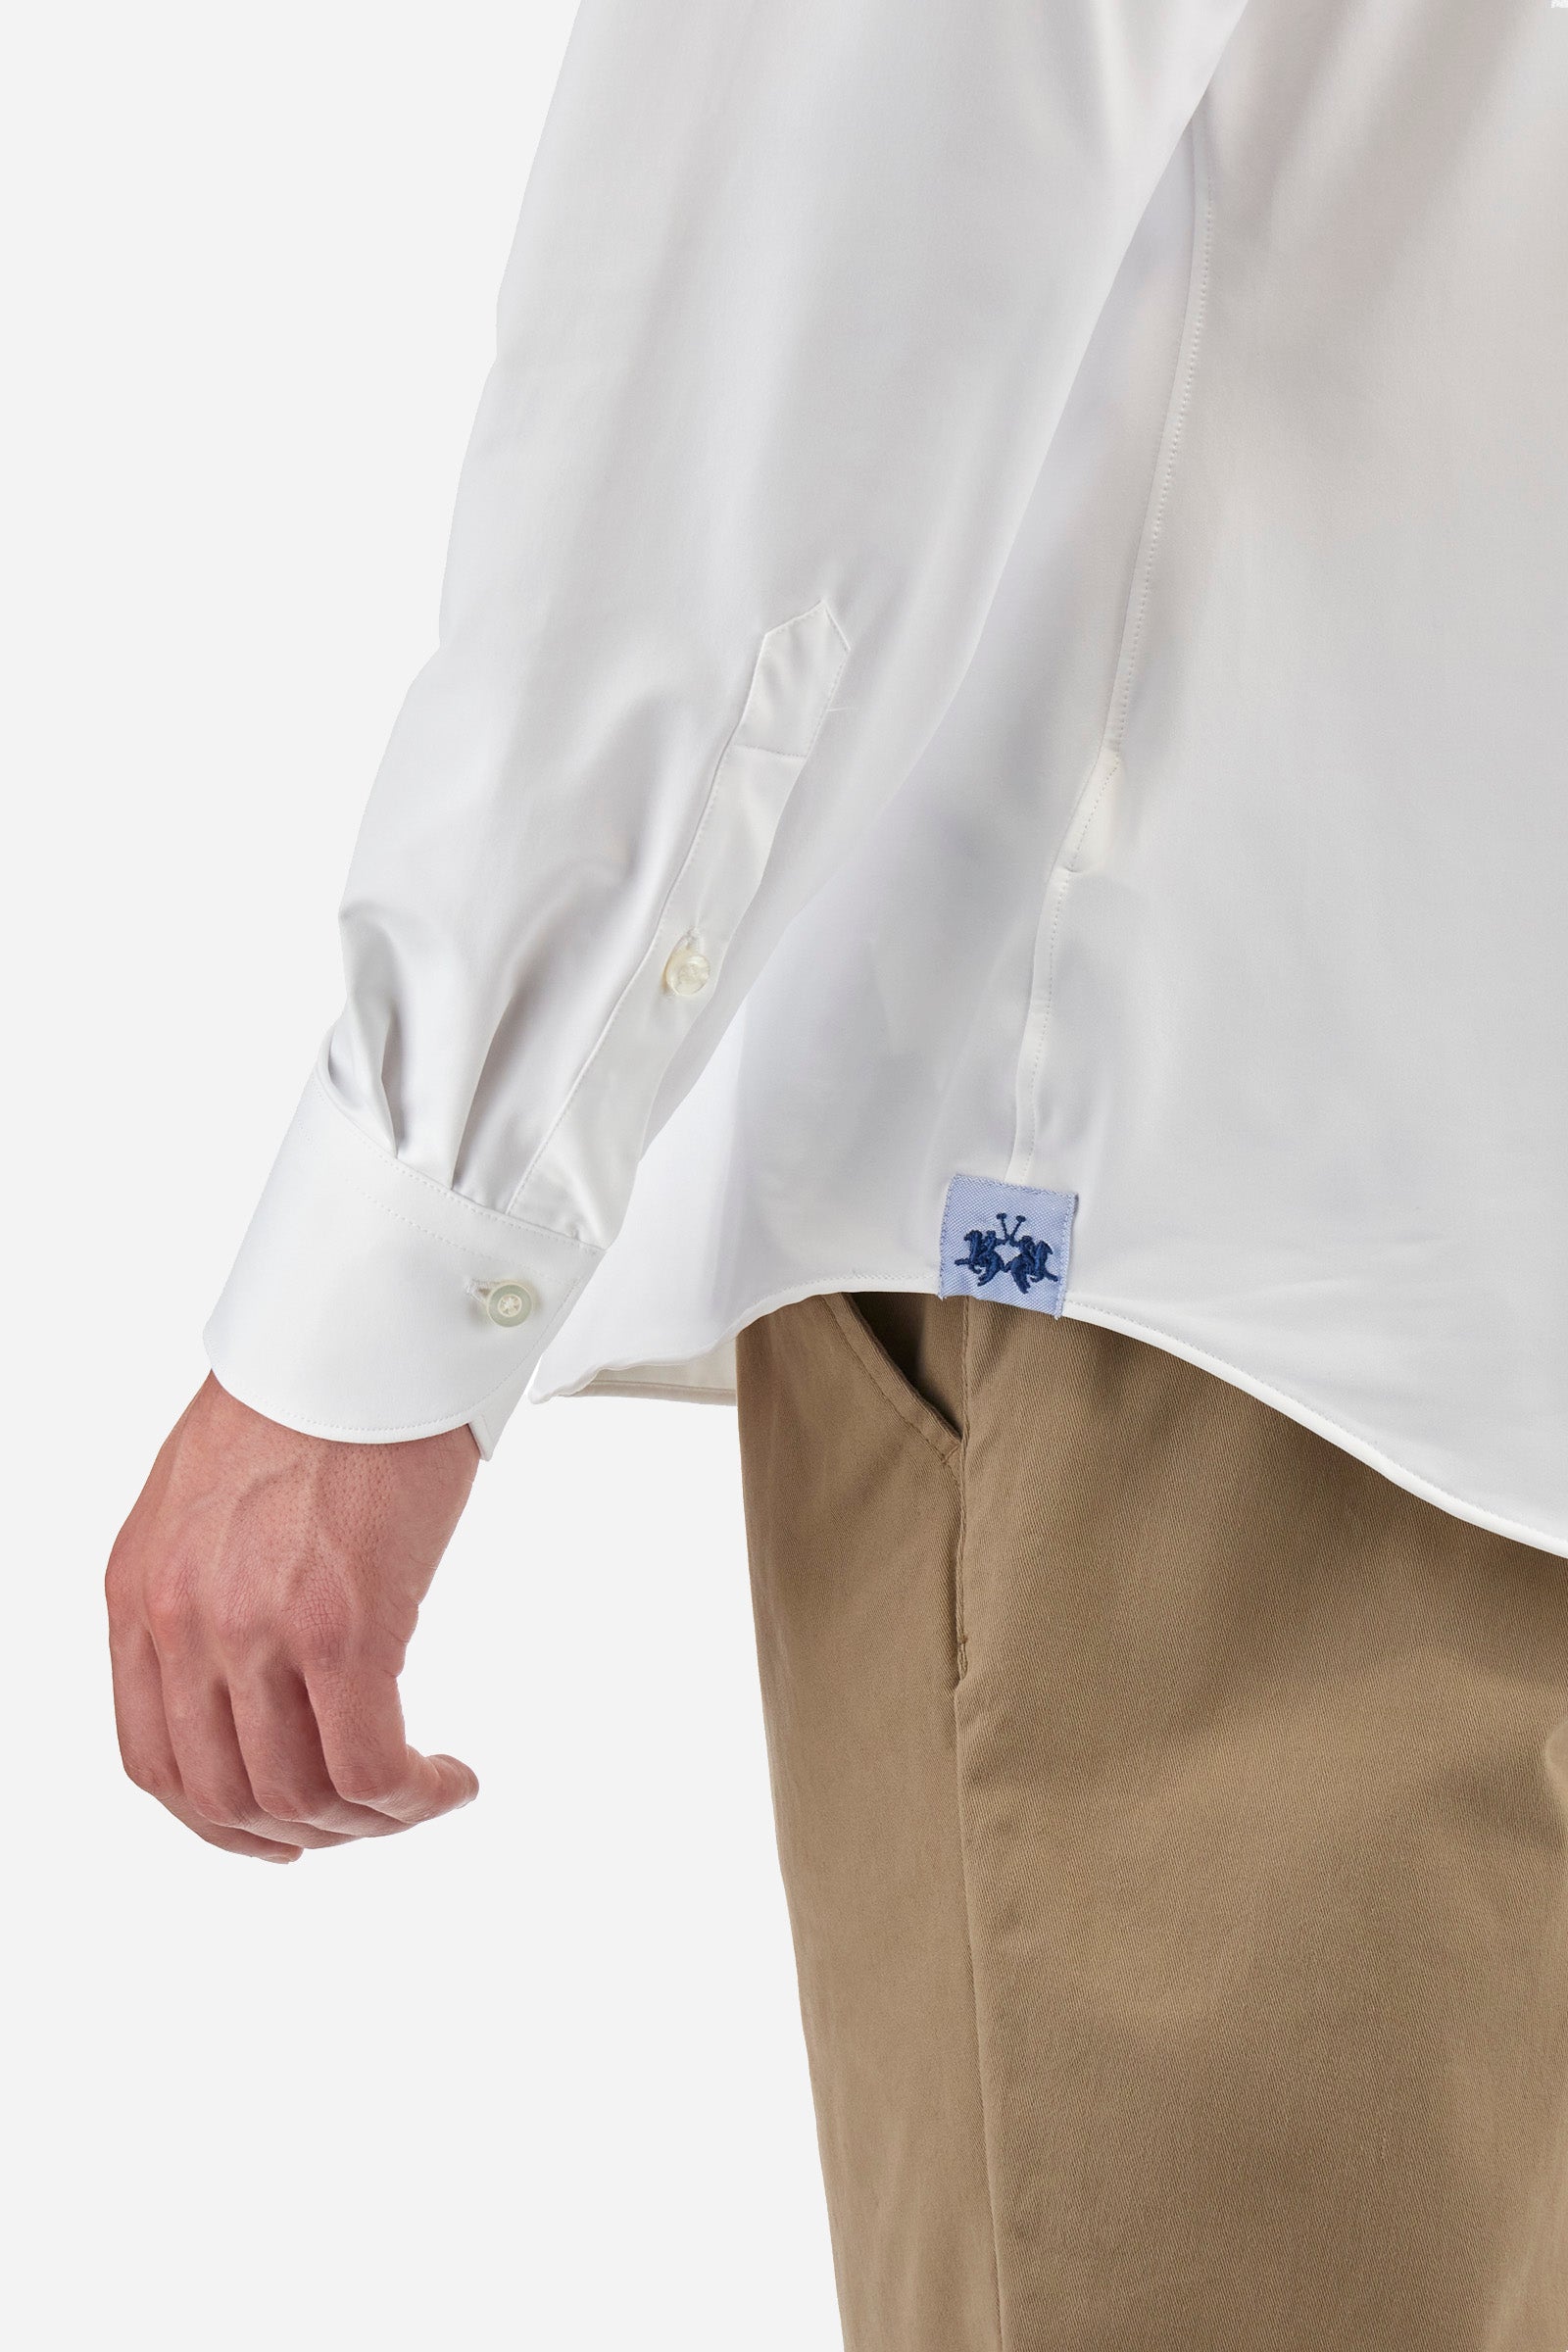 Men’s Blue Ribbon Shirt in Cotton Jersey Regular Fit Long Sleeves